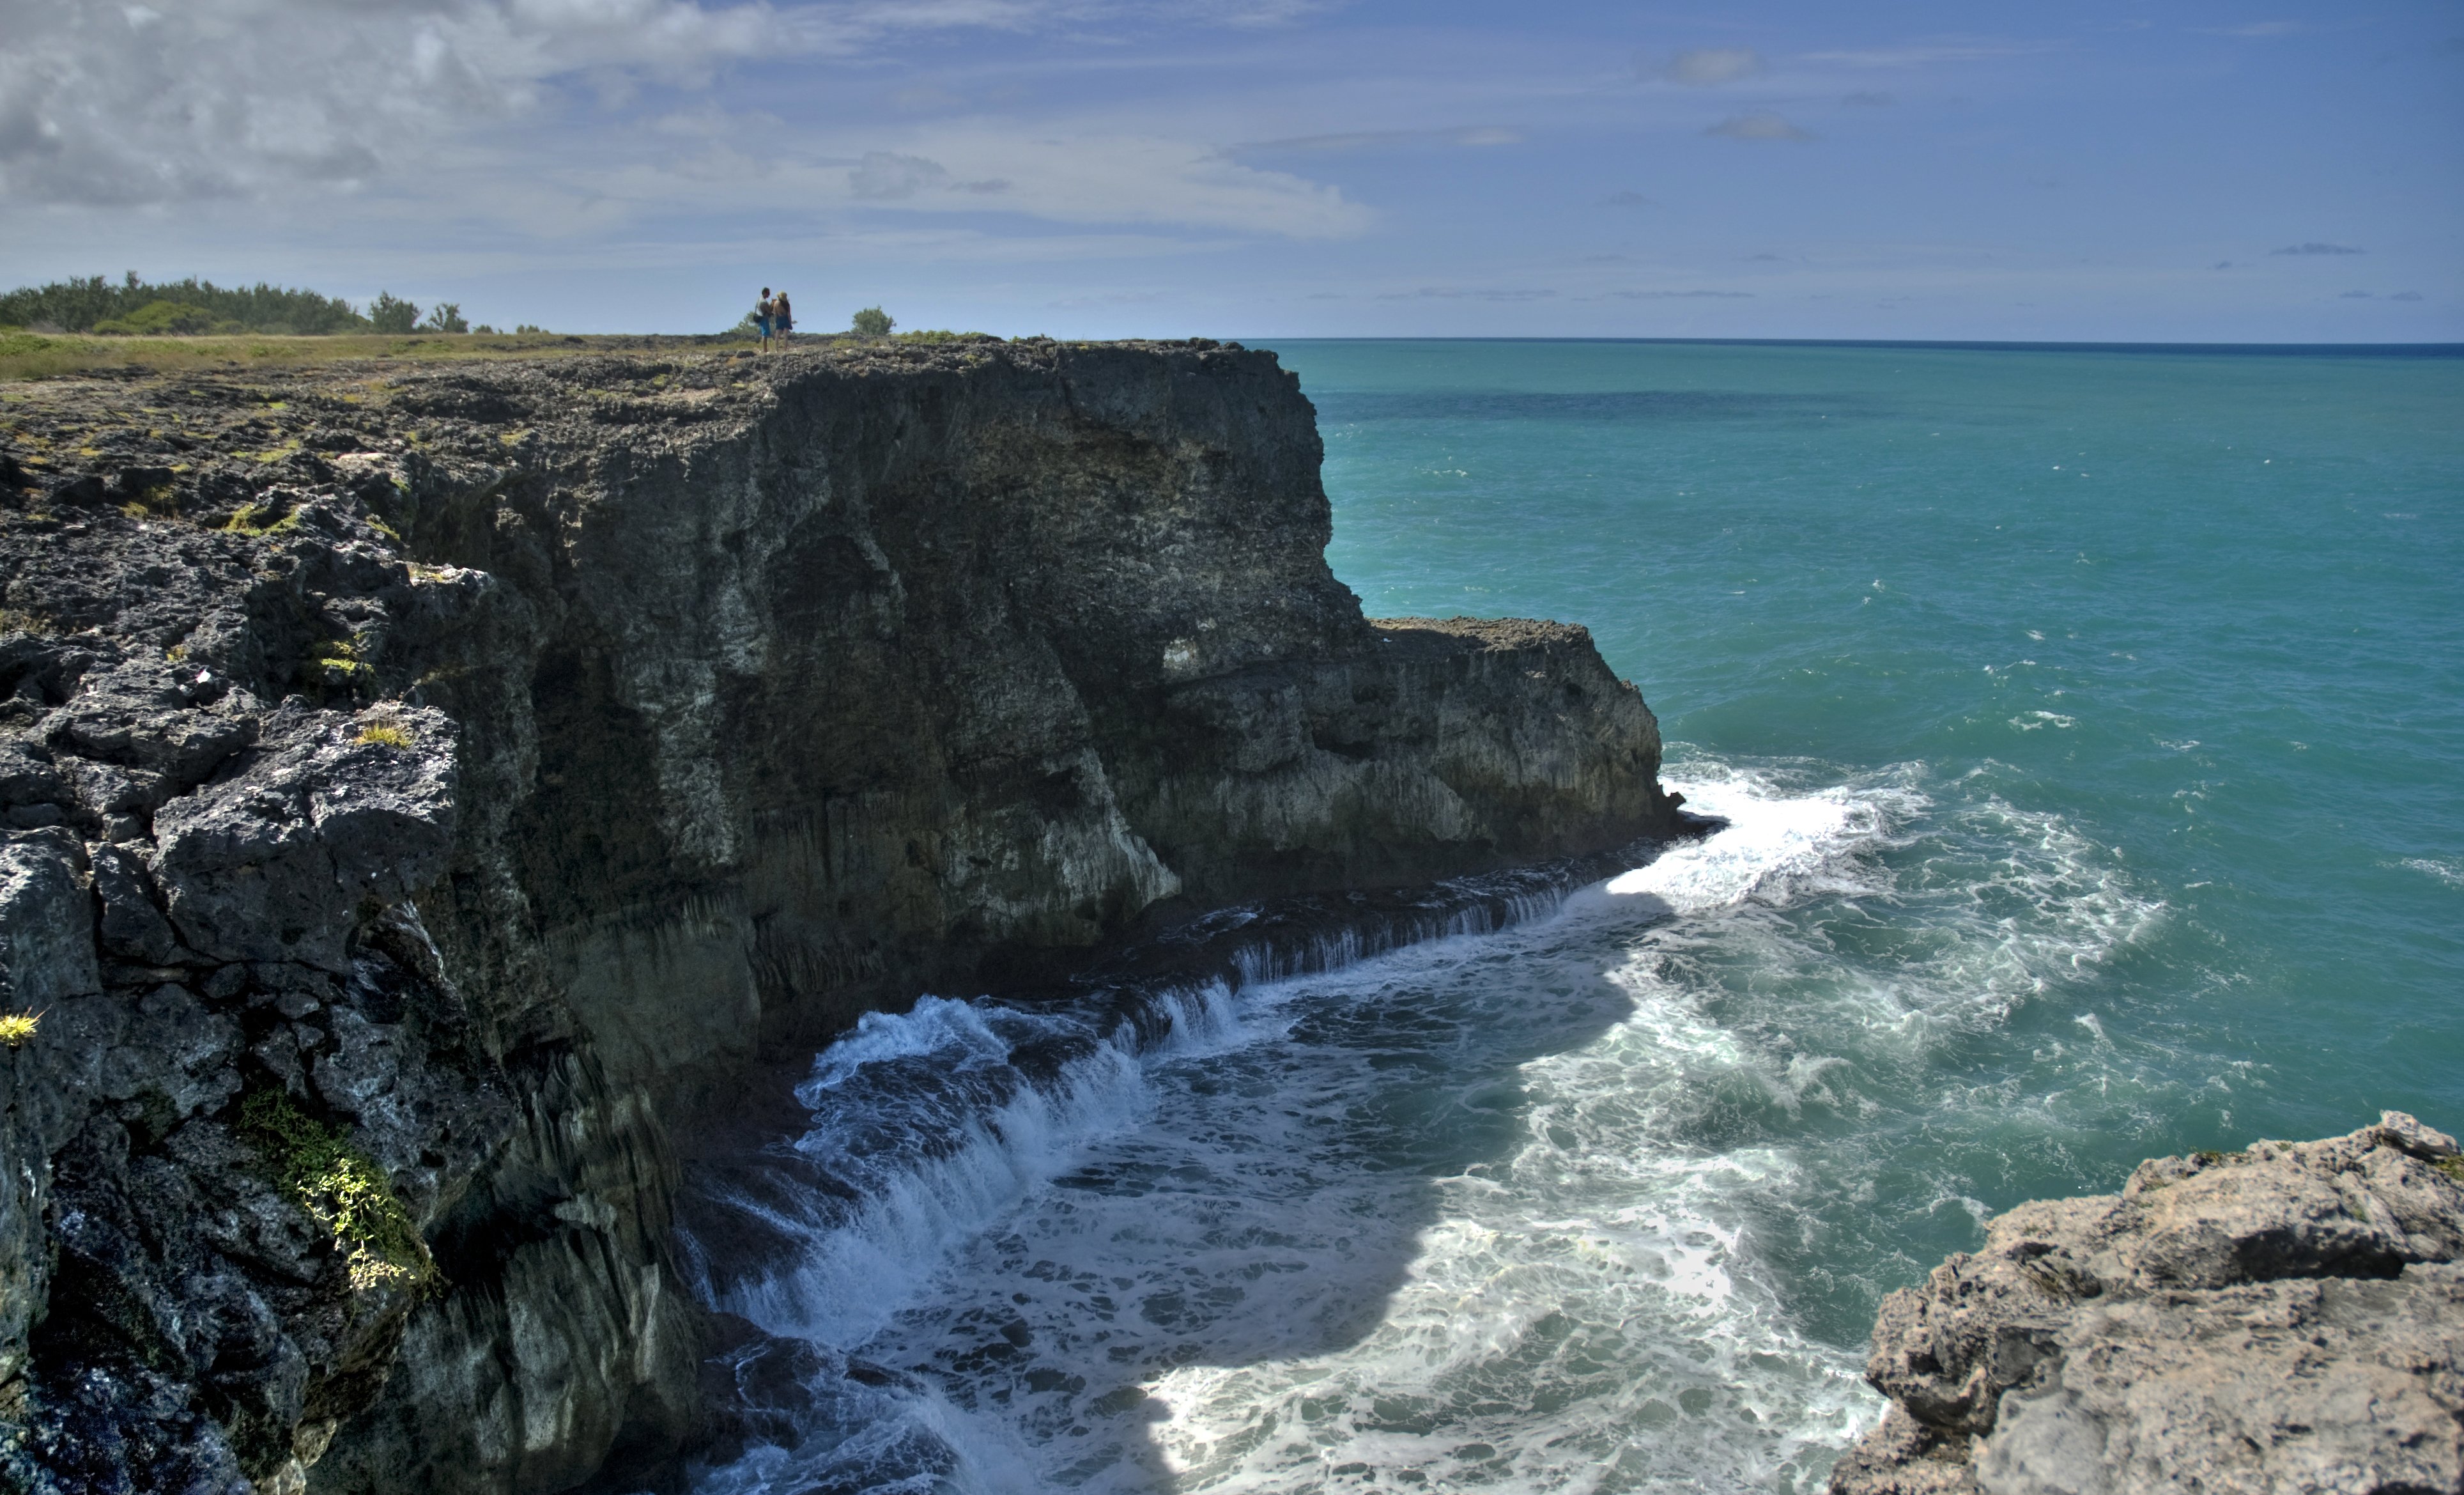 File:Sea cliff, Barbados coast.jpg - Wikimedia Commons